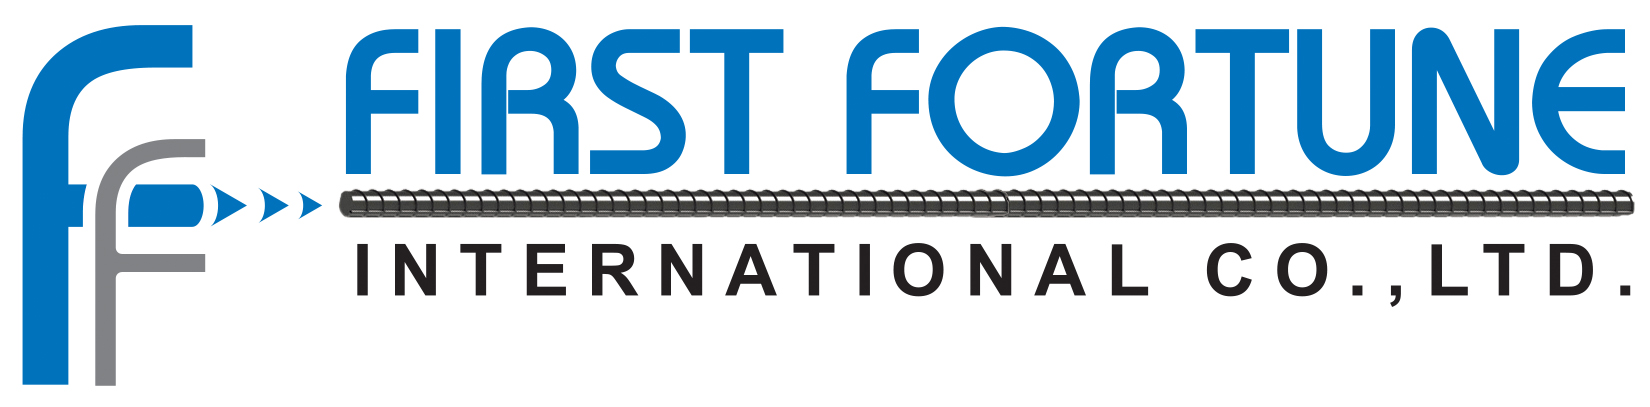 First Fortune International Co., Ltd.